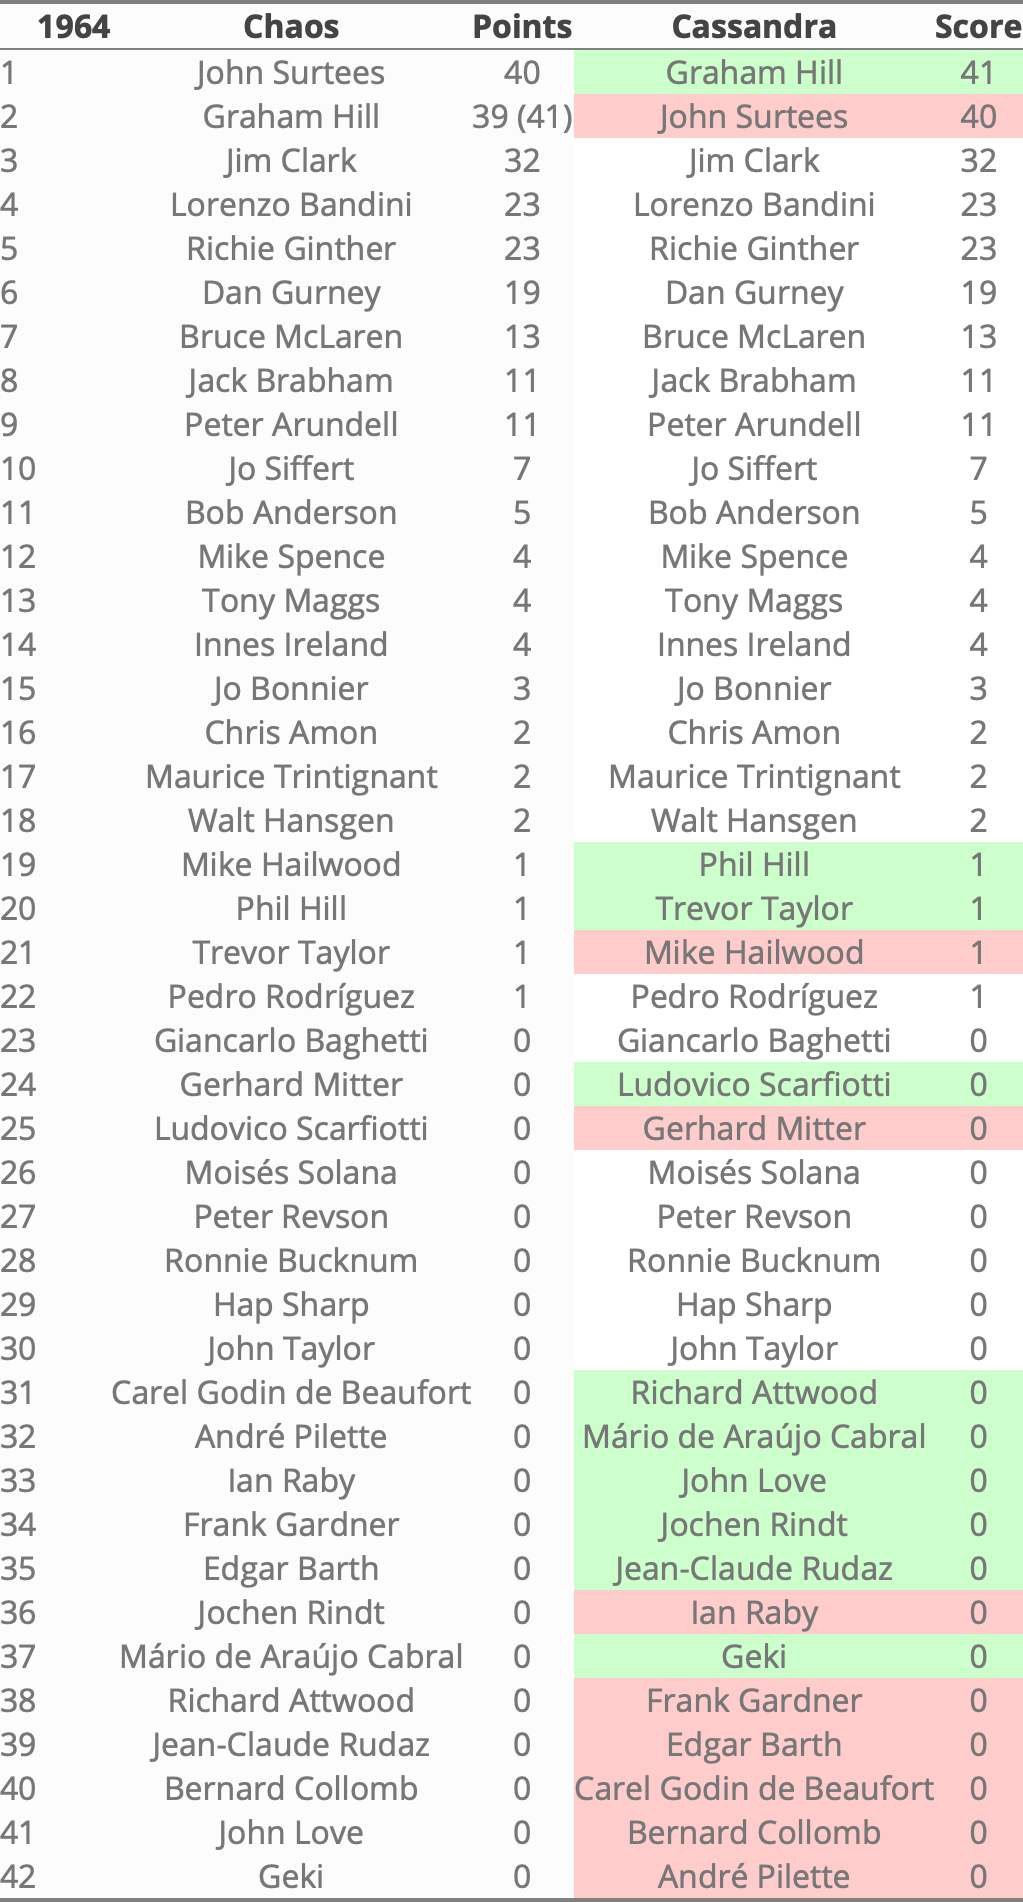 Rankings 1964 in Cassandra